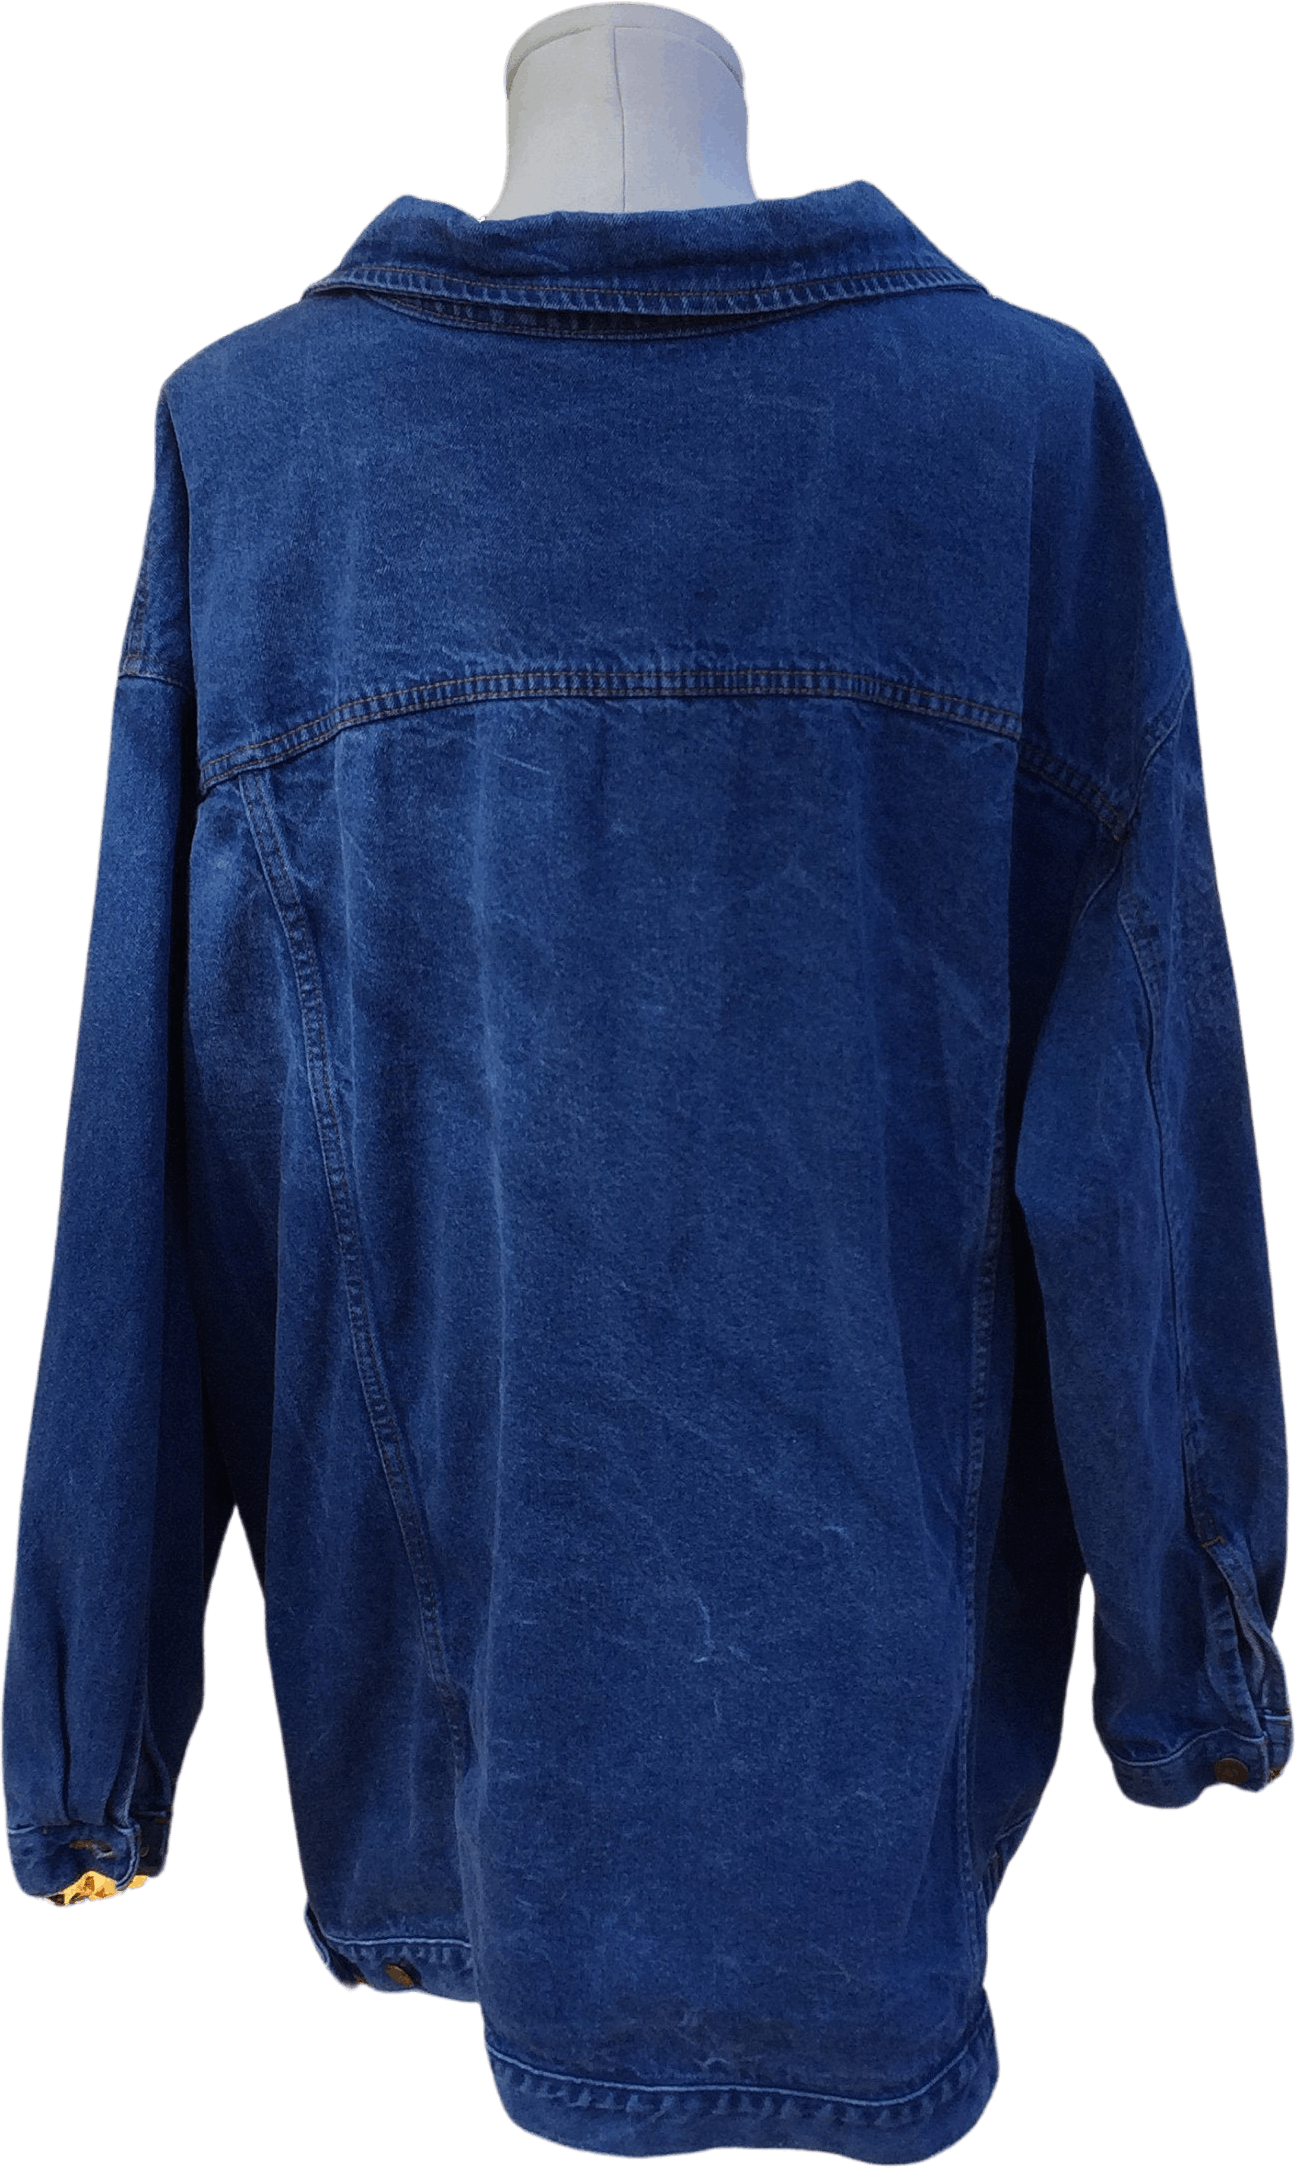 Vintage Blue Denim Button Up Jacket by Hunters Run | Shop THRILLING